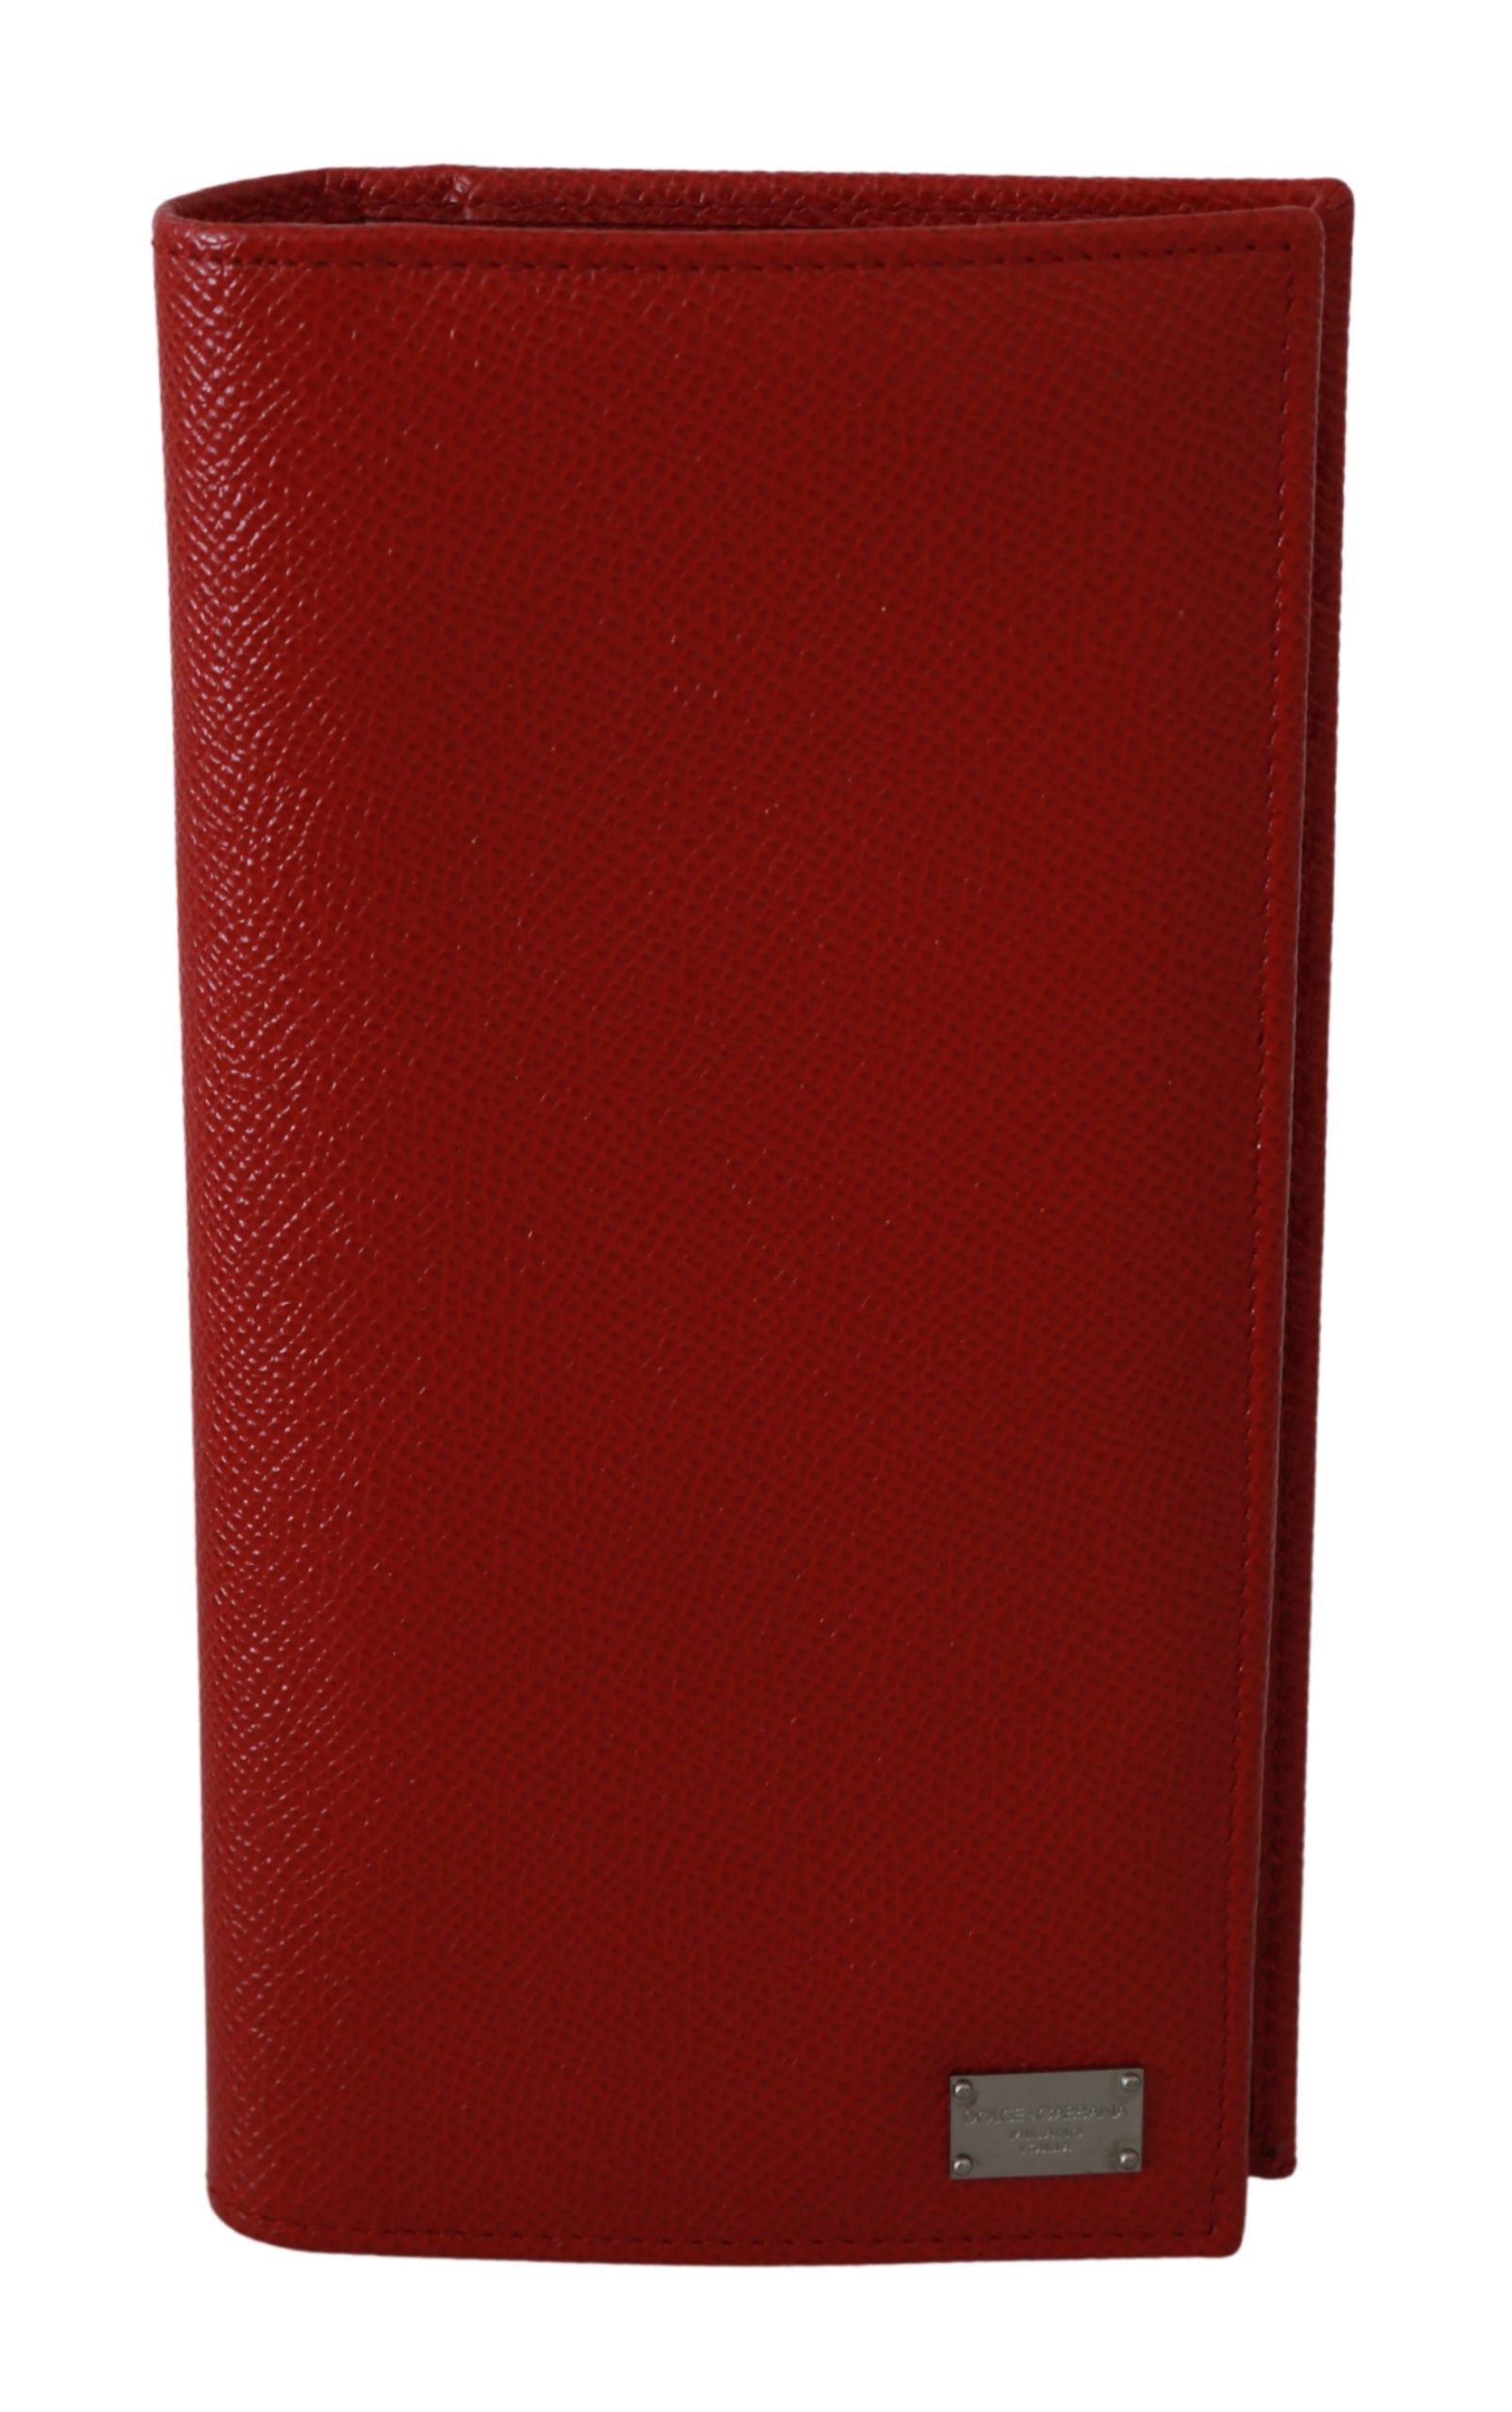 Dolce & Gabbana Men's DG Logo Bifold Card Holder Leather Wallet Red VAS9298